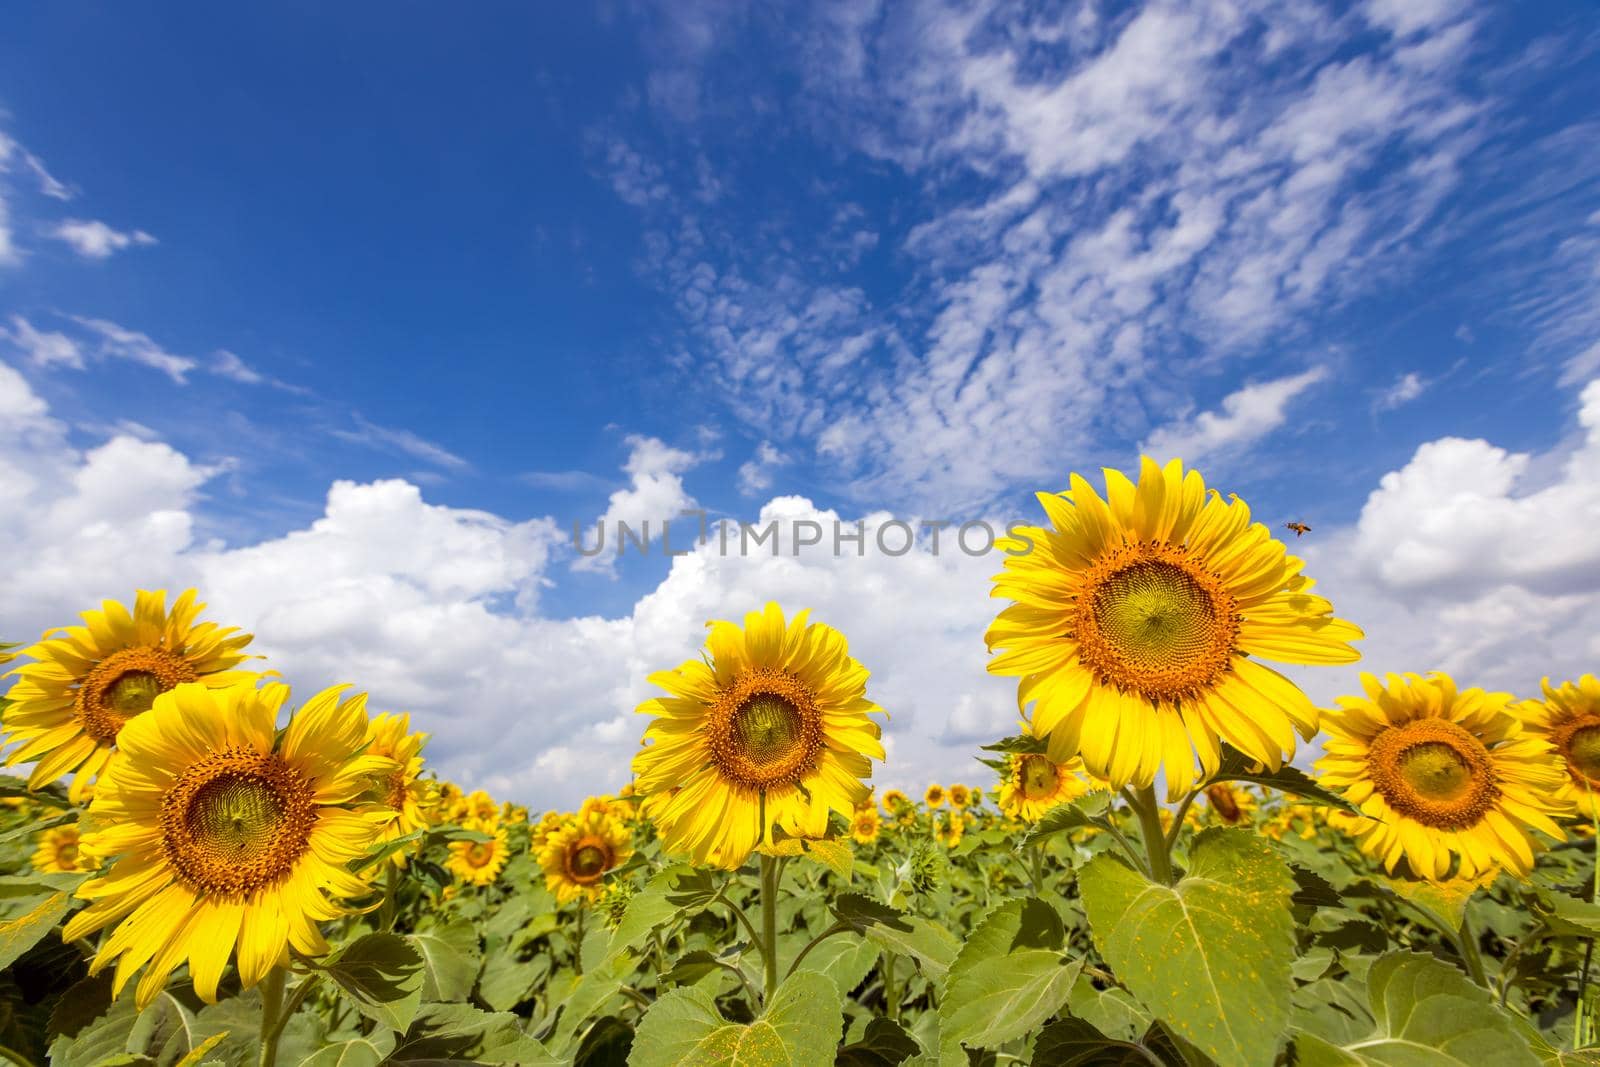 Field sunflowers on the blue sky.